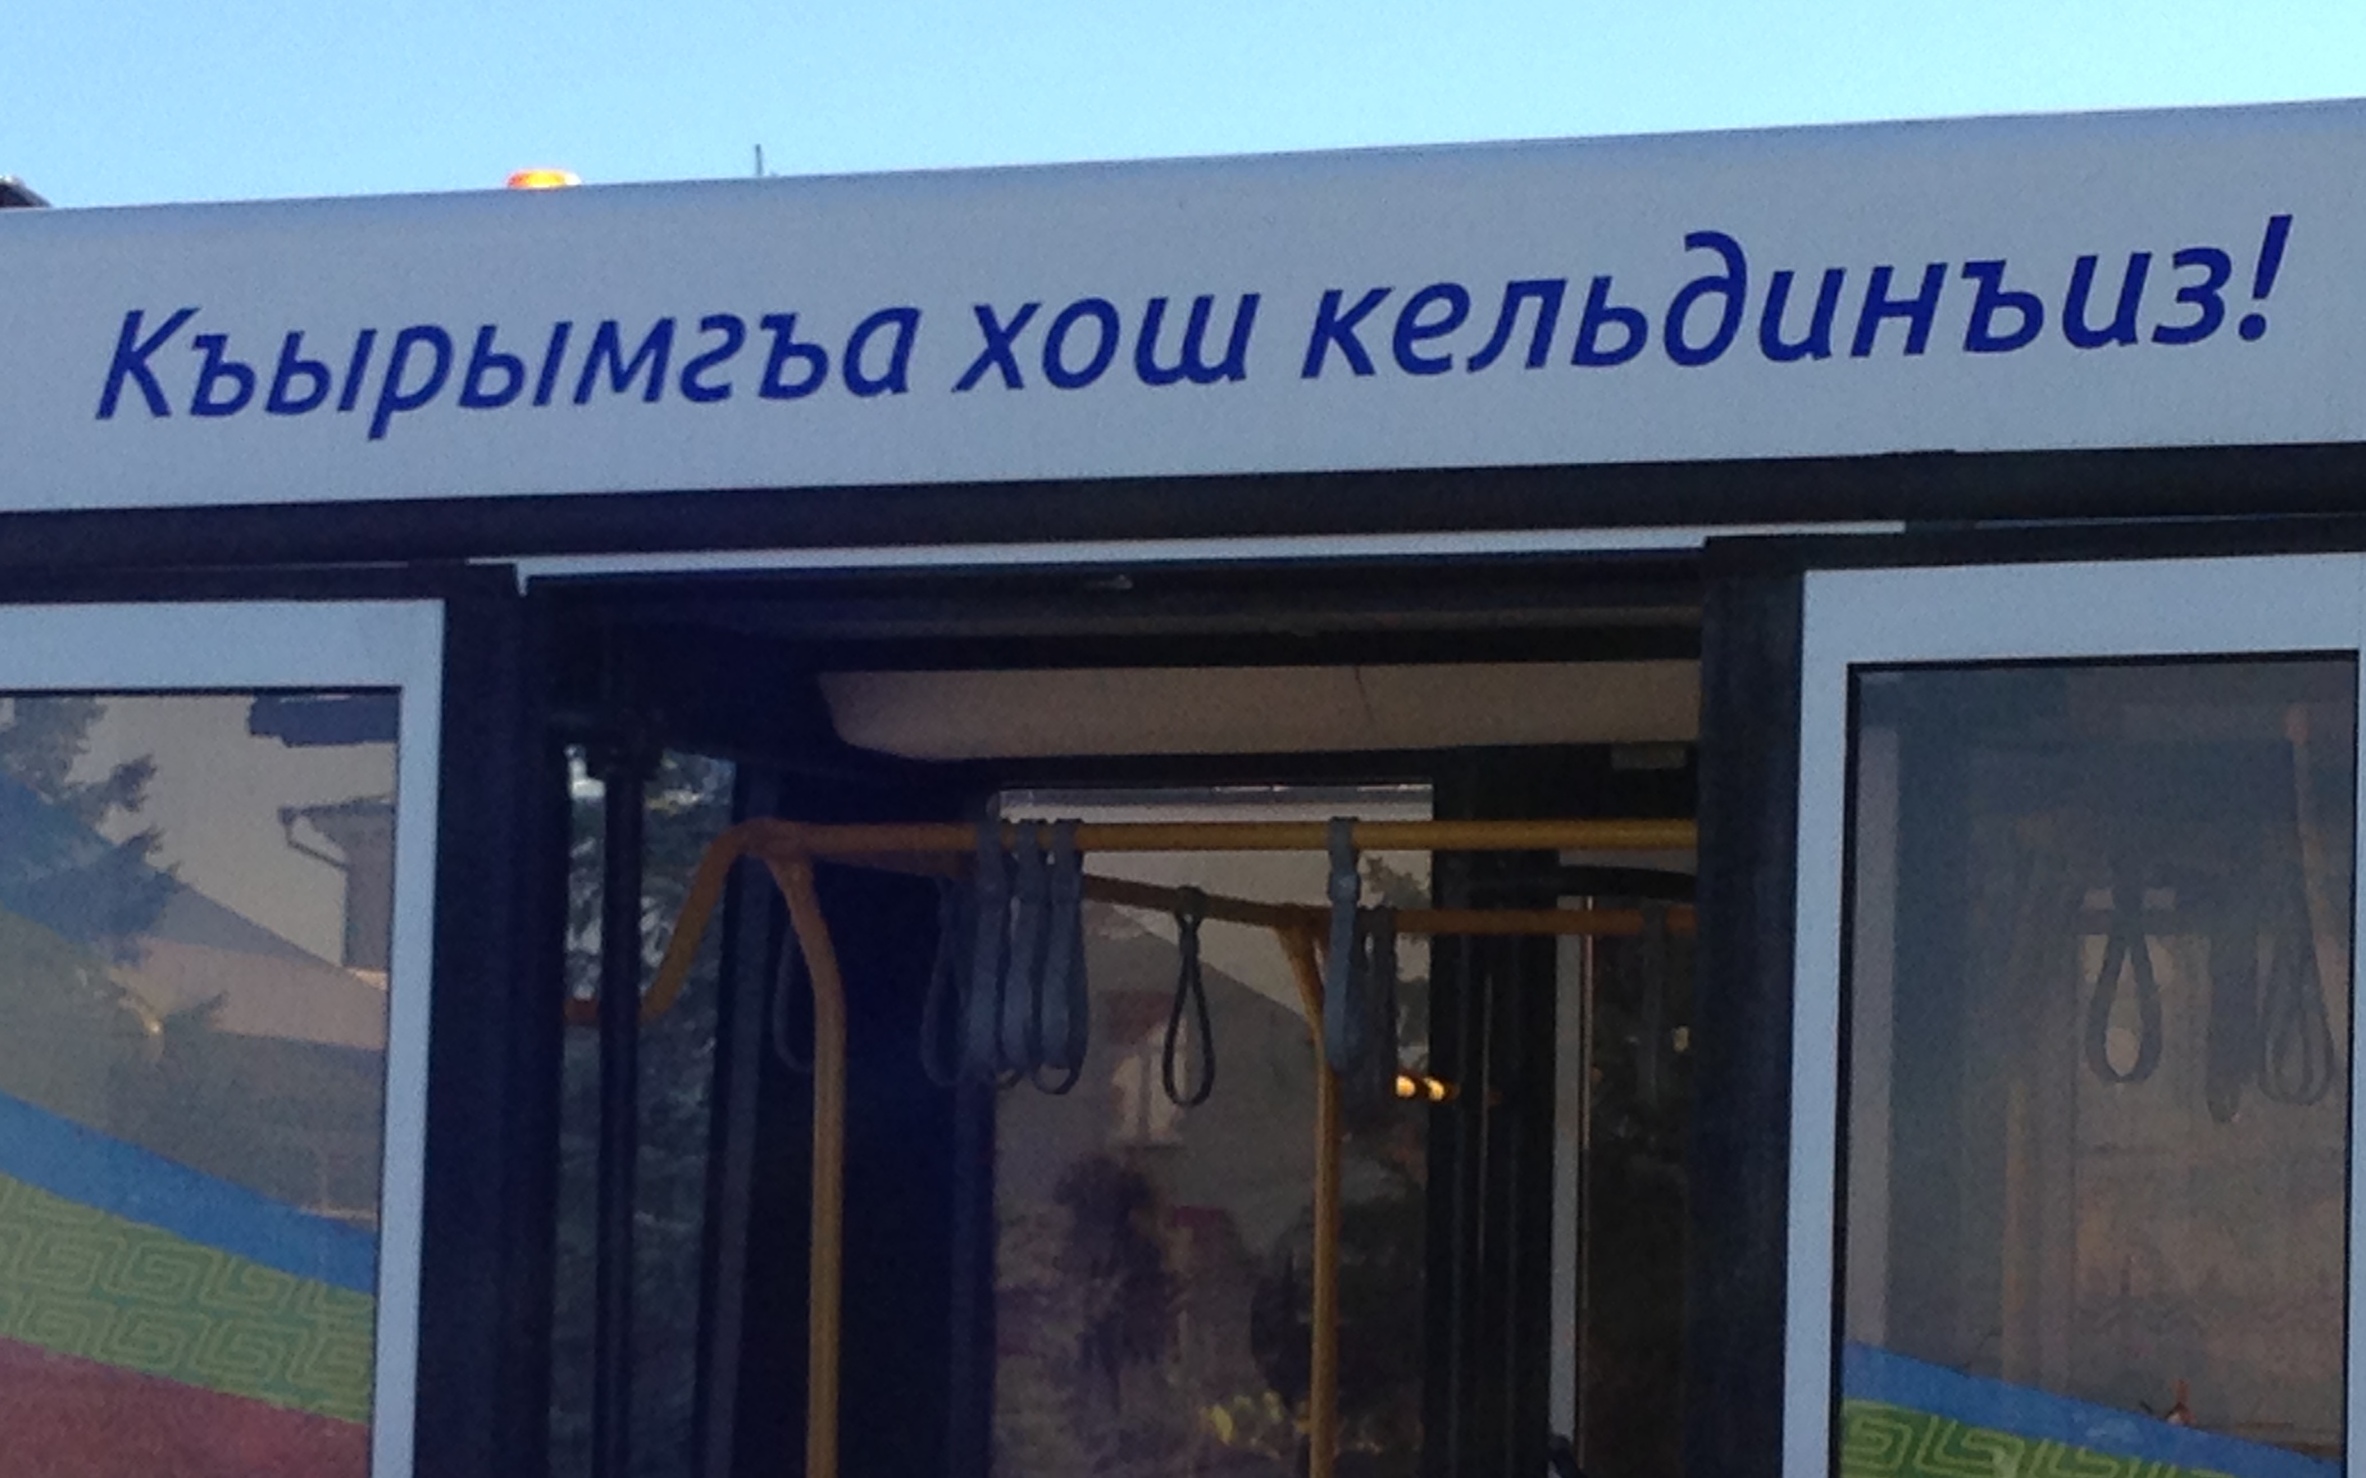 Crimean_Tatar_language_on_airport_bus_Simferopol